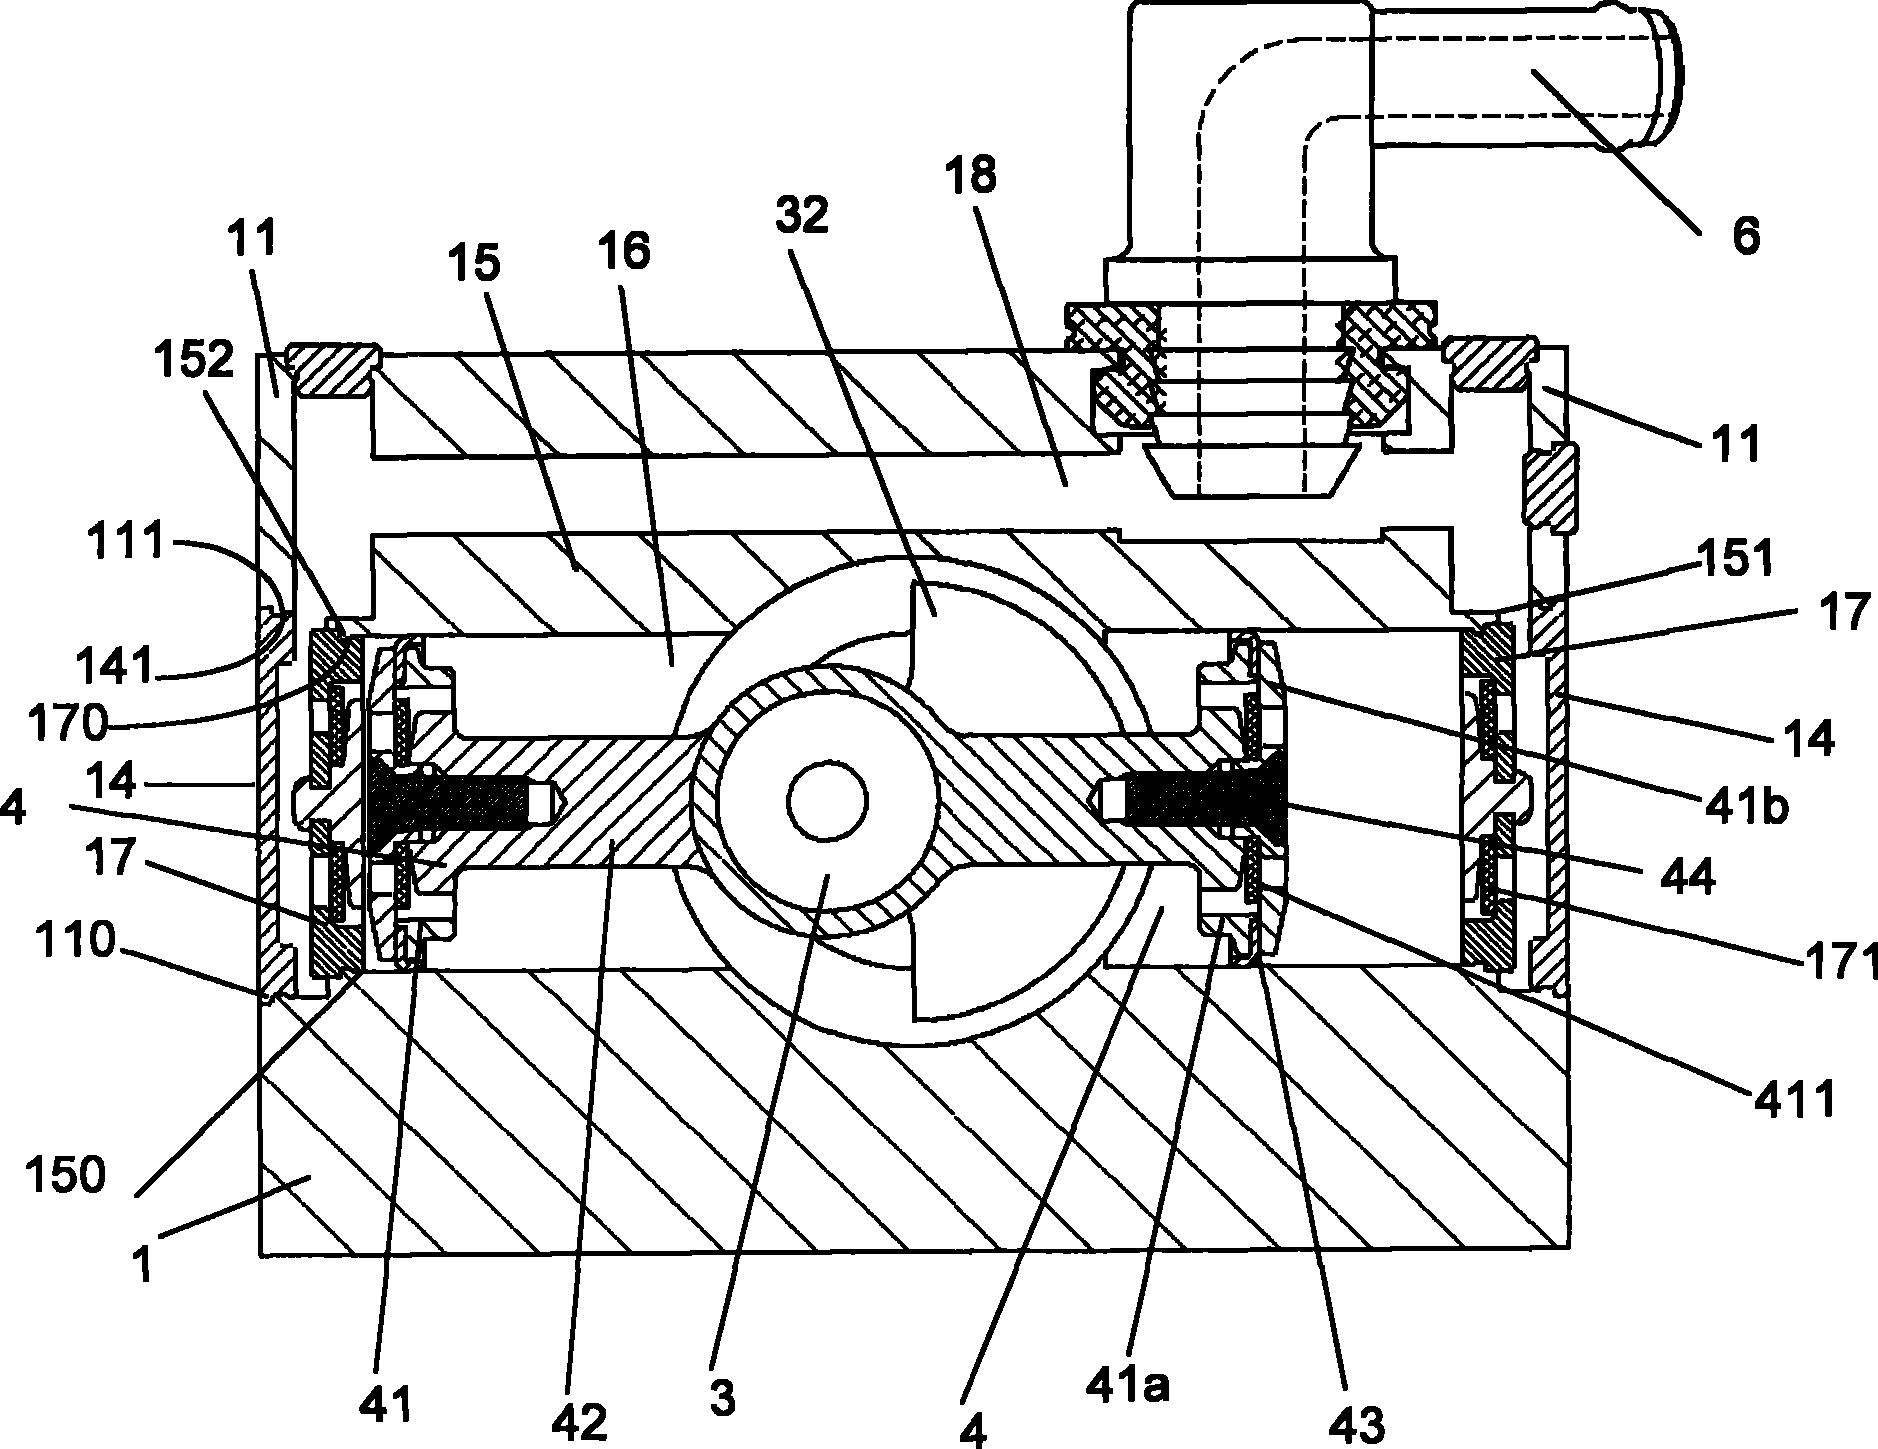 Oppositely arranged swing piston type vacuum pump used for automobiles